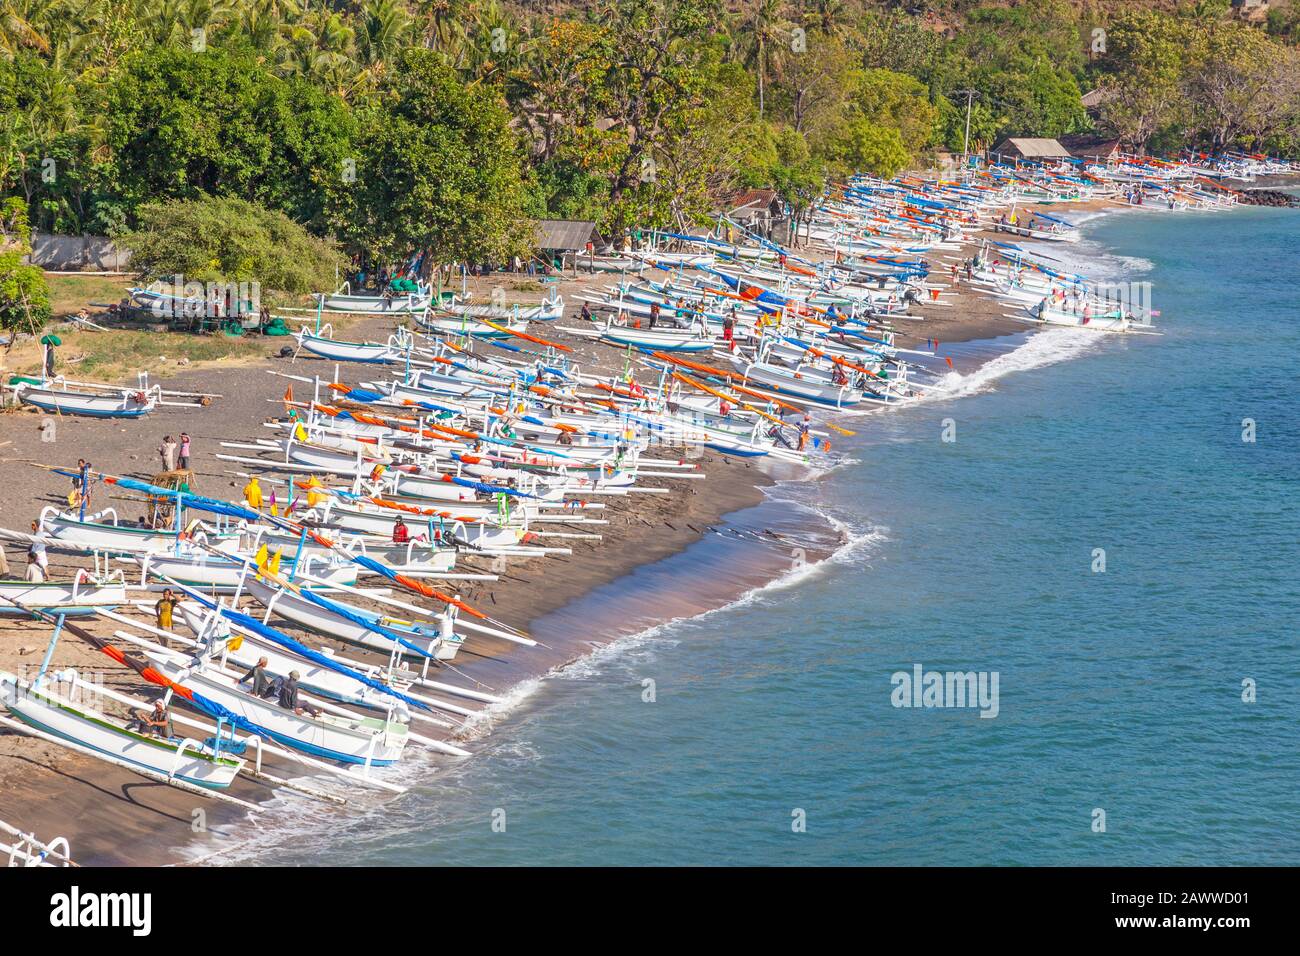 Jukungs tradizionale (outrigger pesca / canoe a vela) su Amed Beach a Bali orientale. Foto Stock